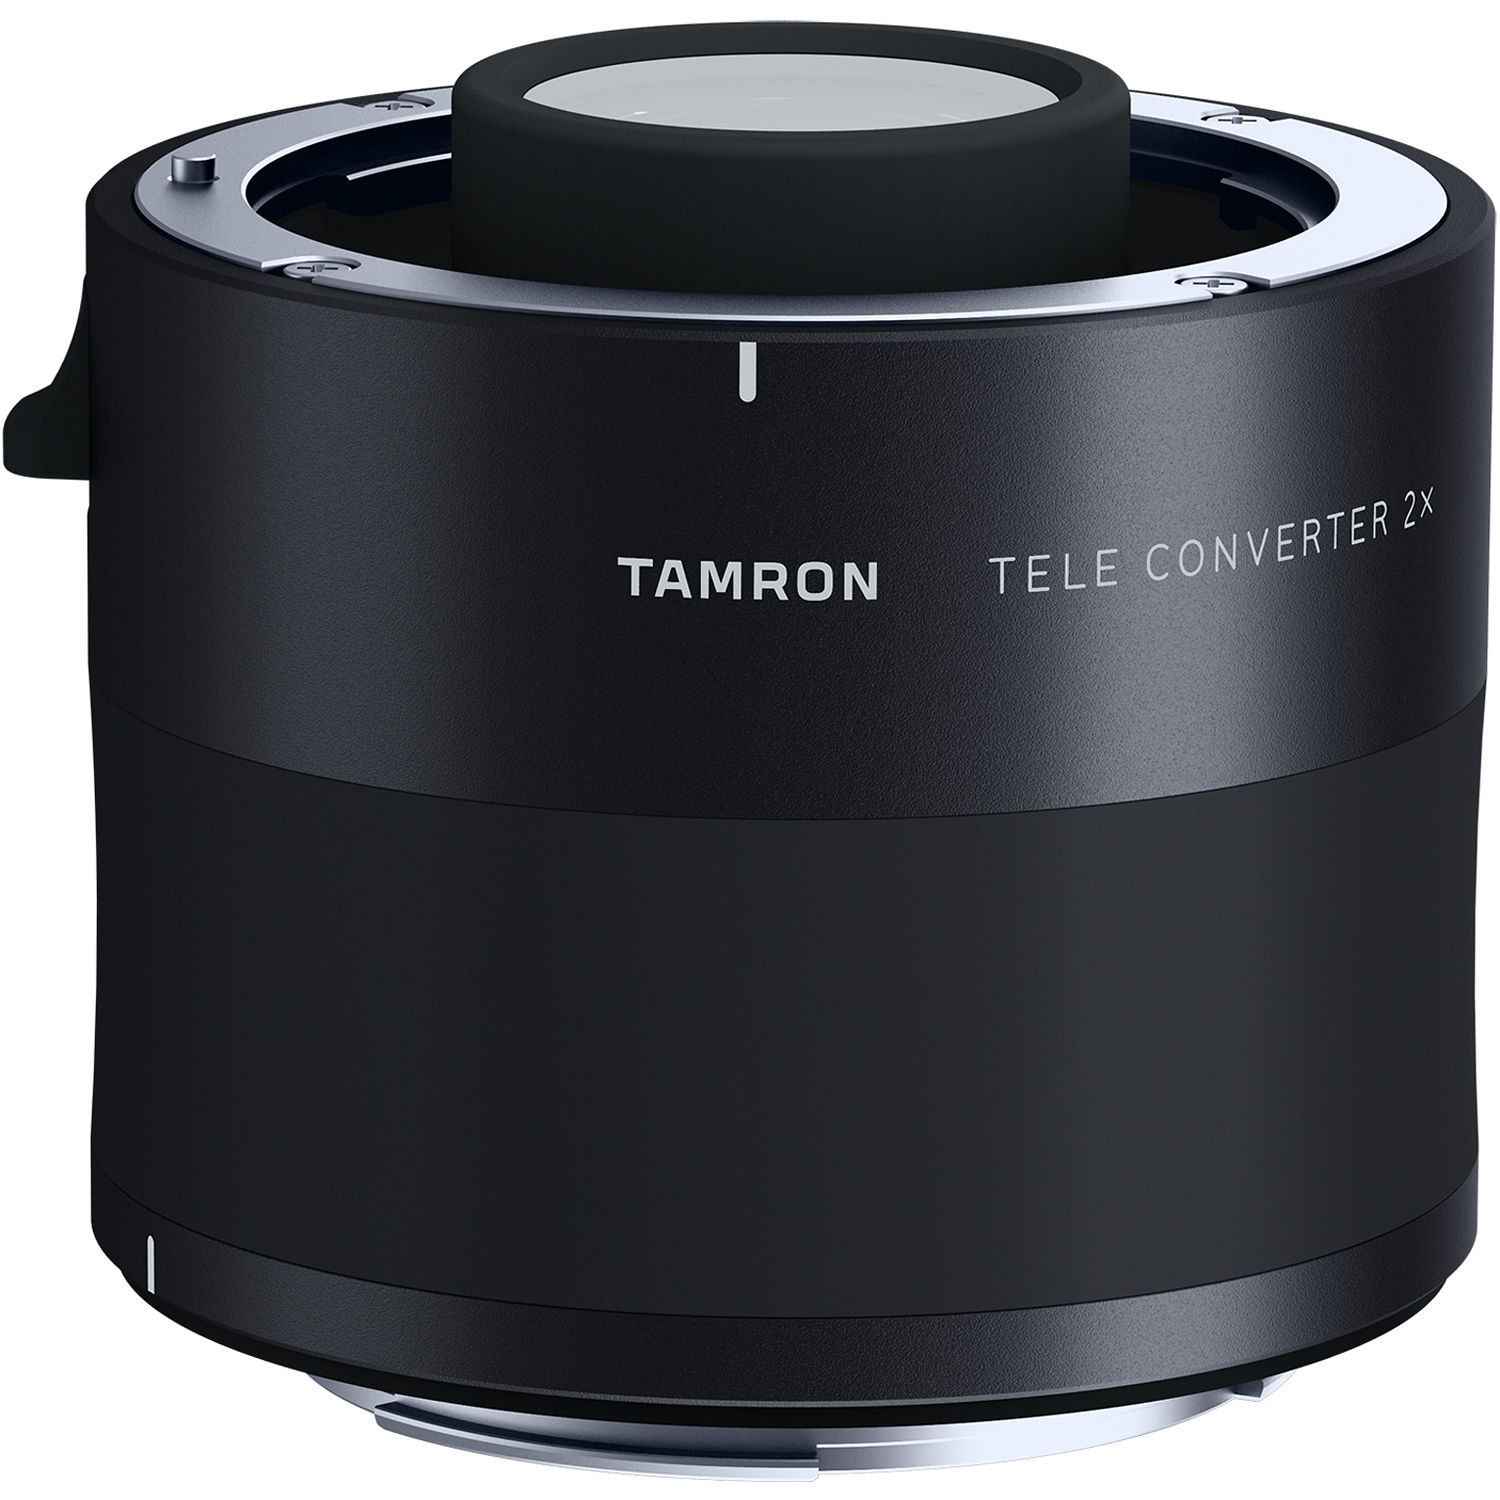 Tamron Teleconverter Compatibility Chart